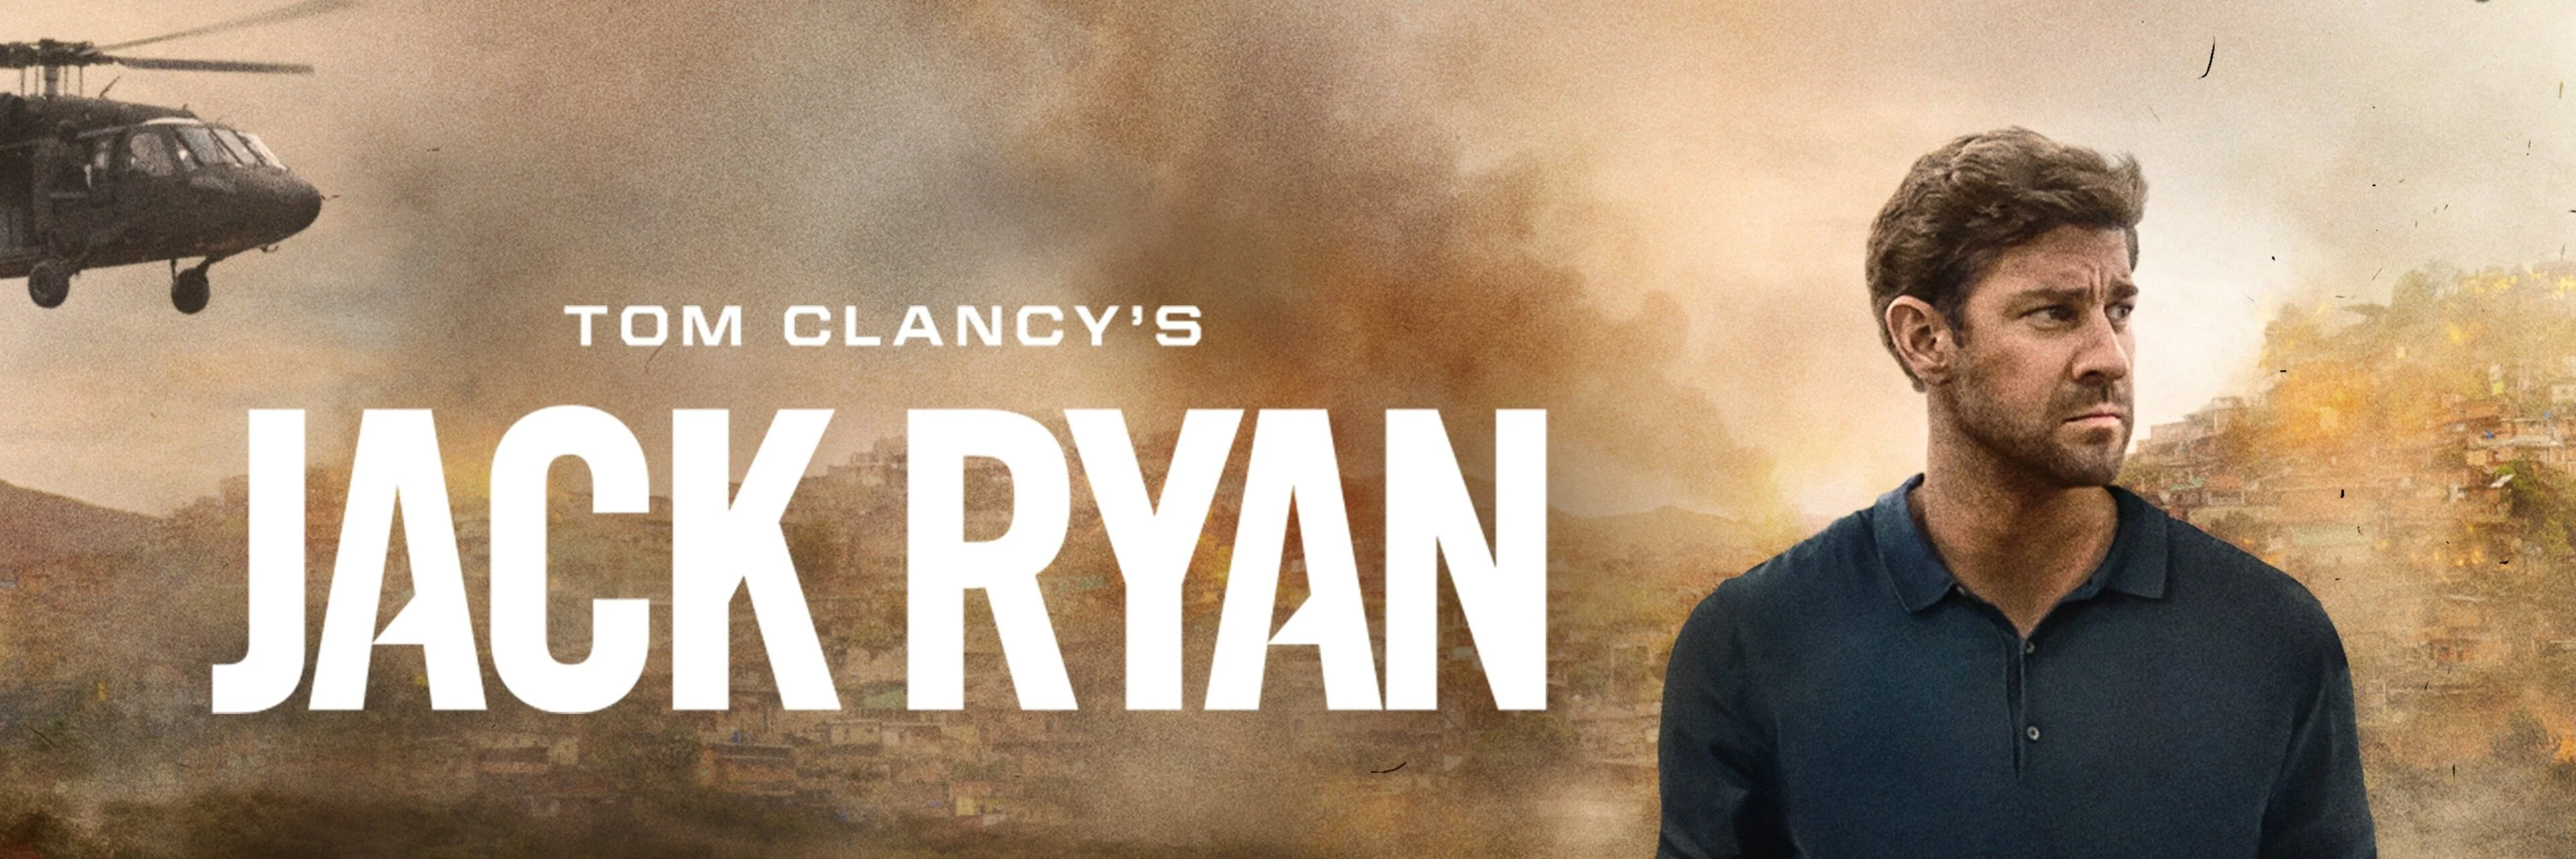 Tom Clancy's Jack Ryan 4K S02 2019 big poster